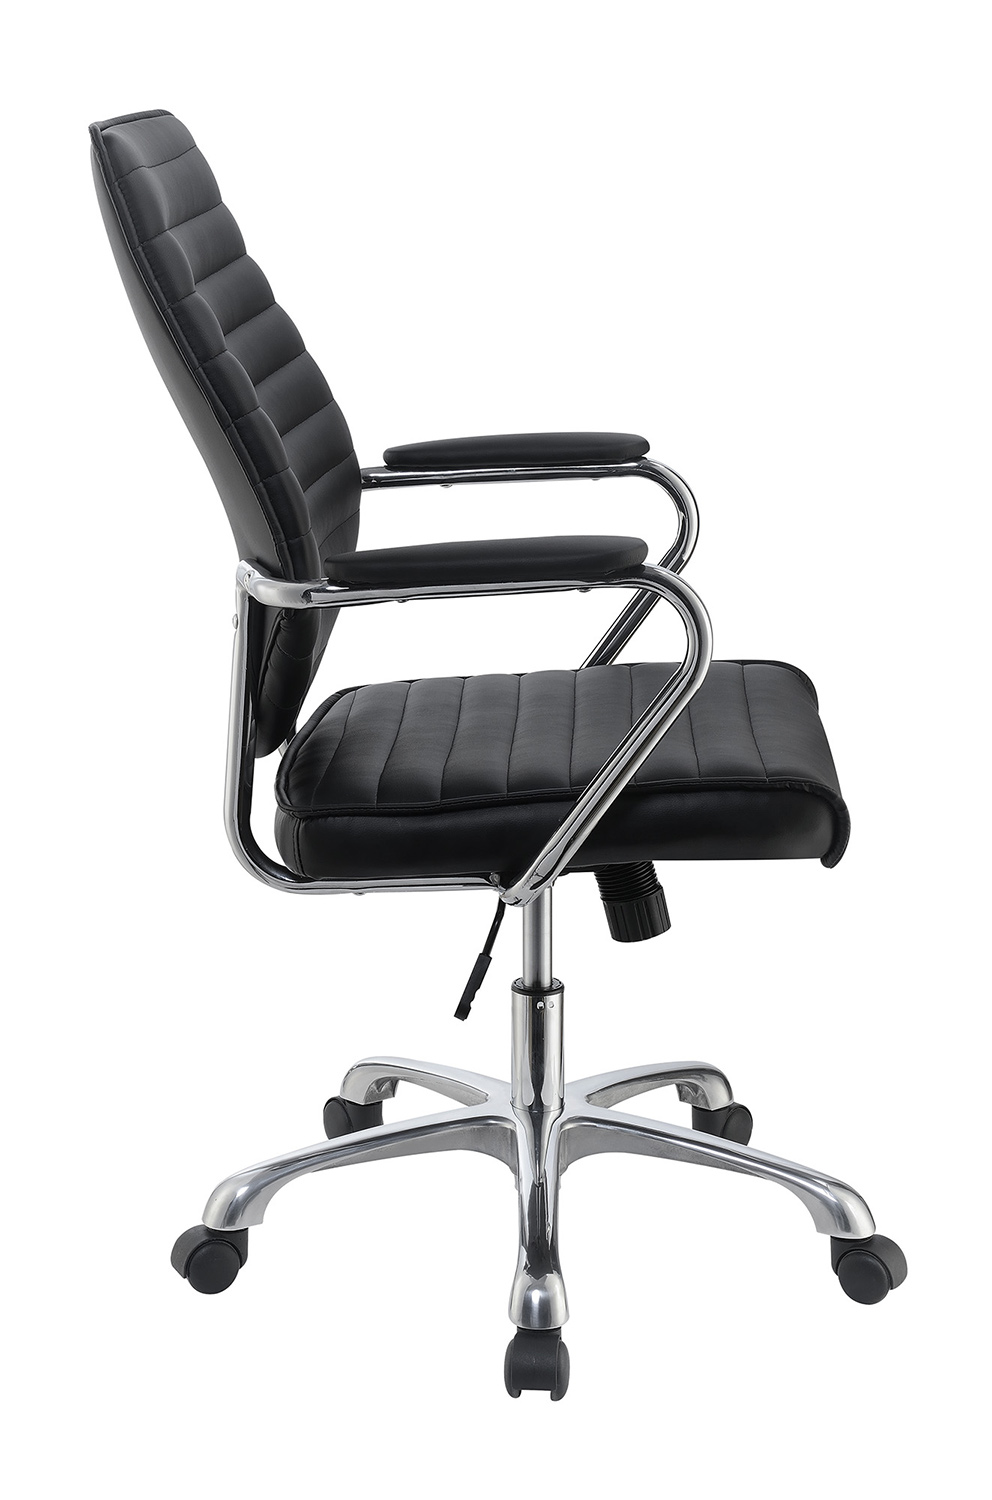 Coaster 801327 Office Chair - Black/Aluminum